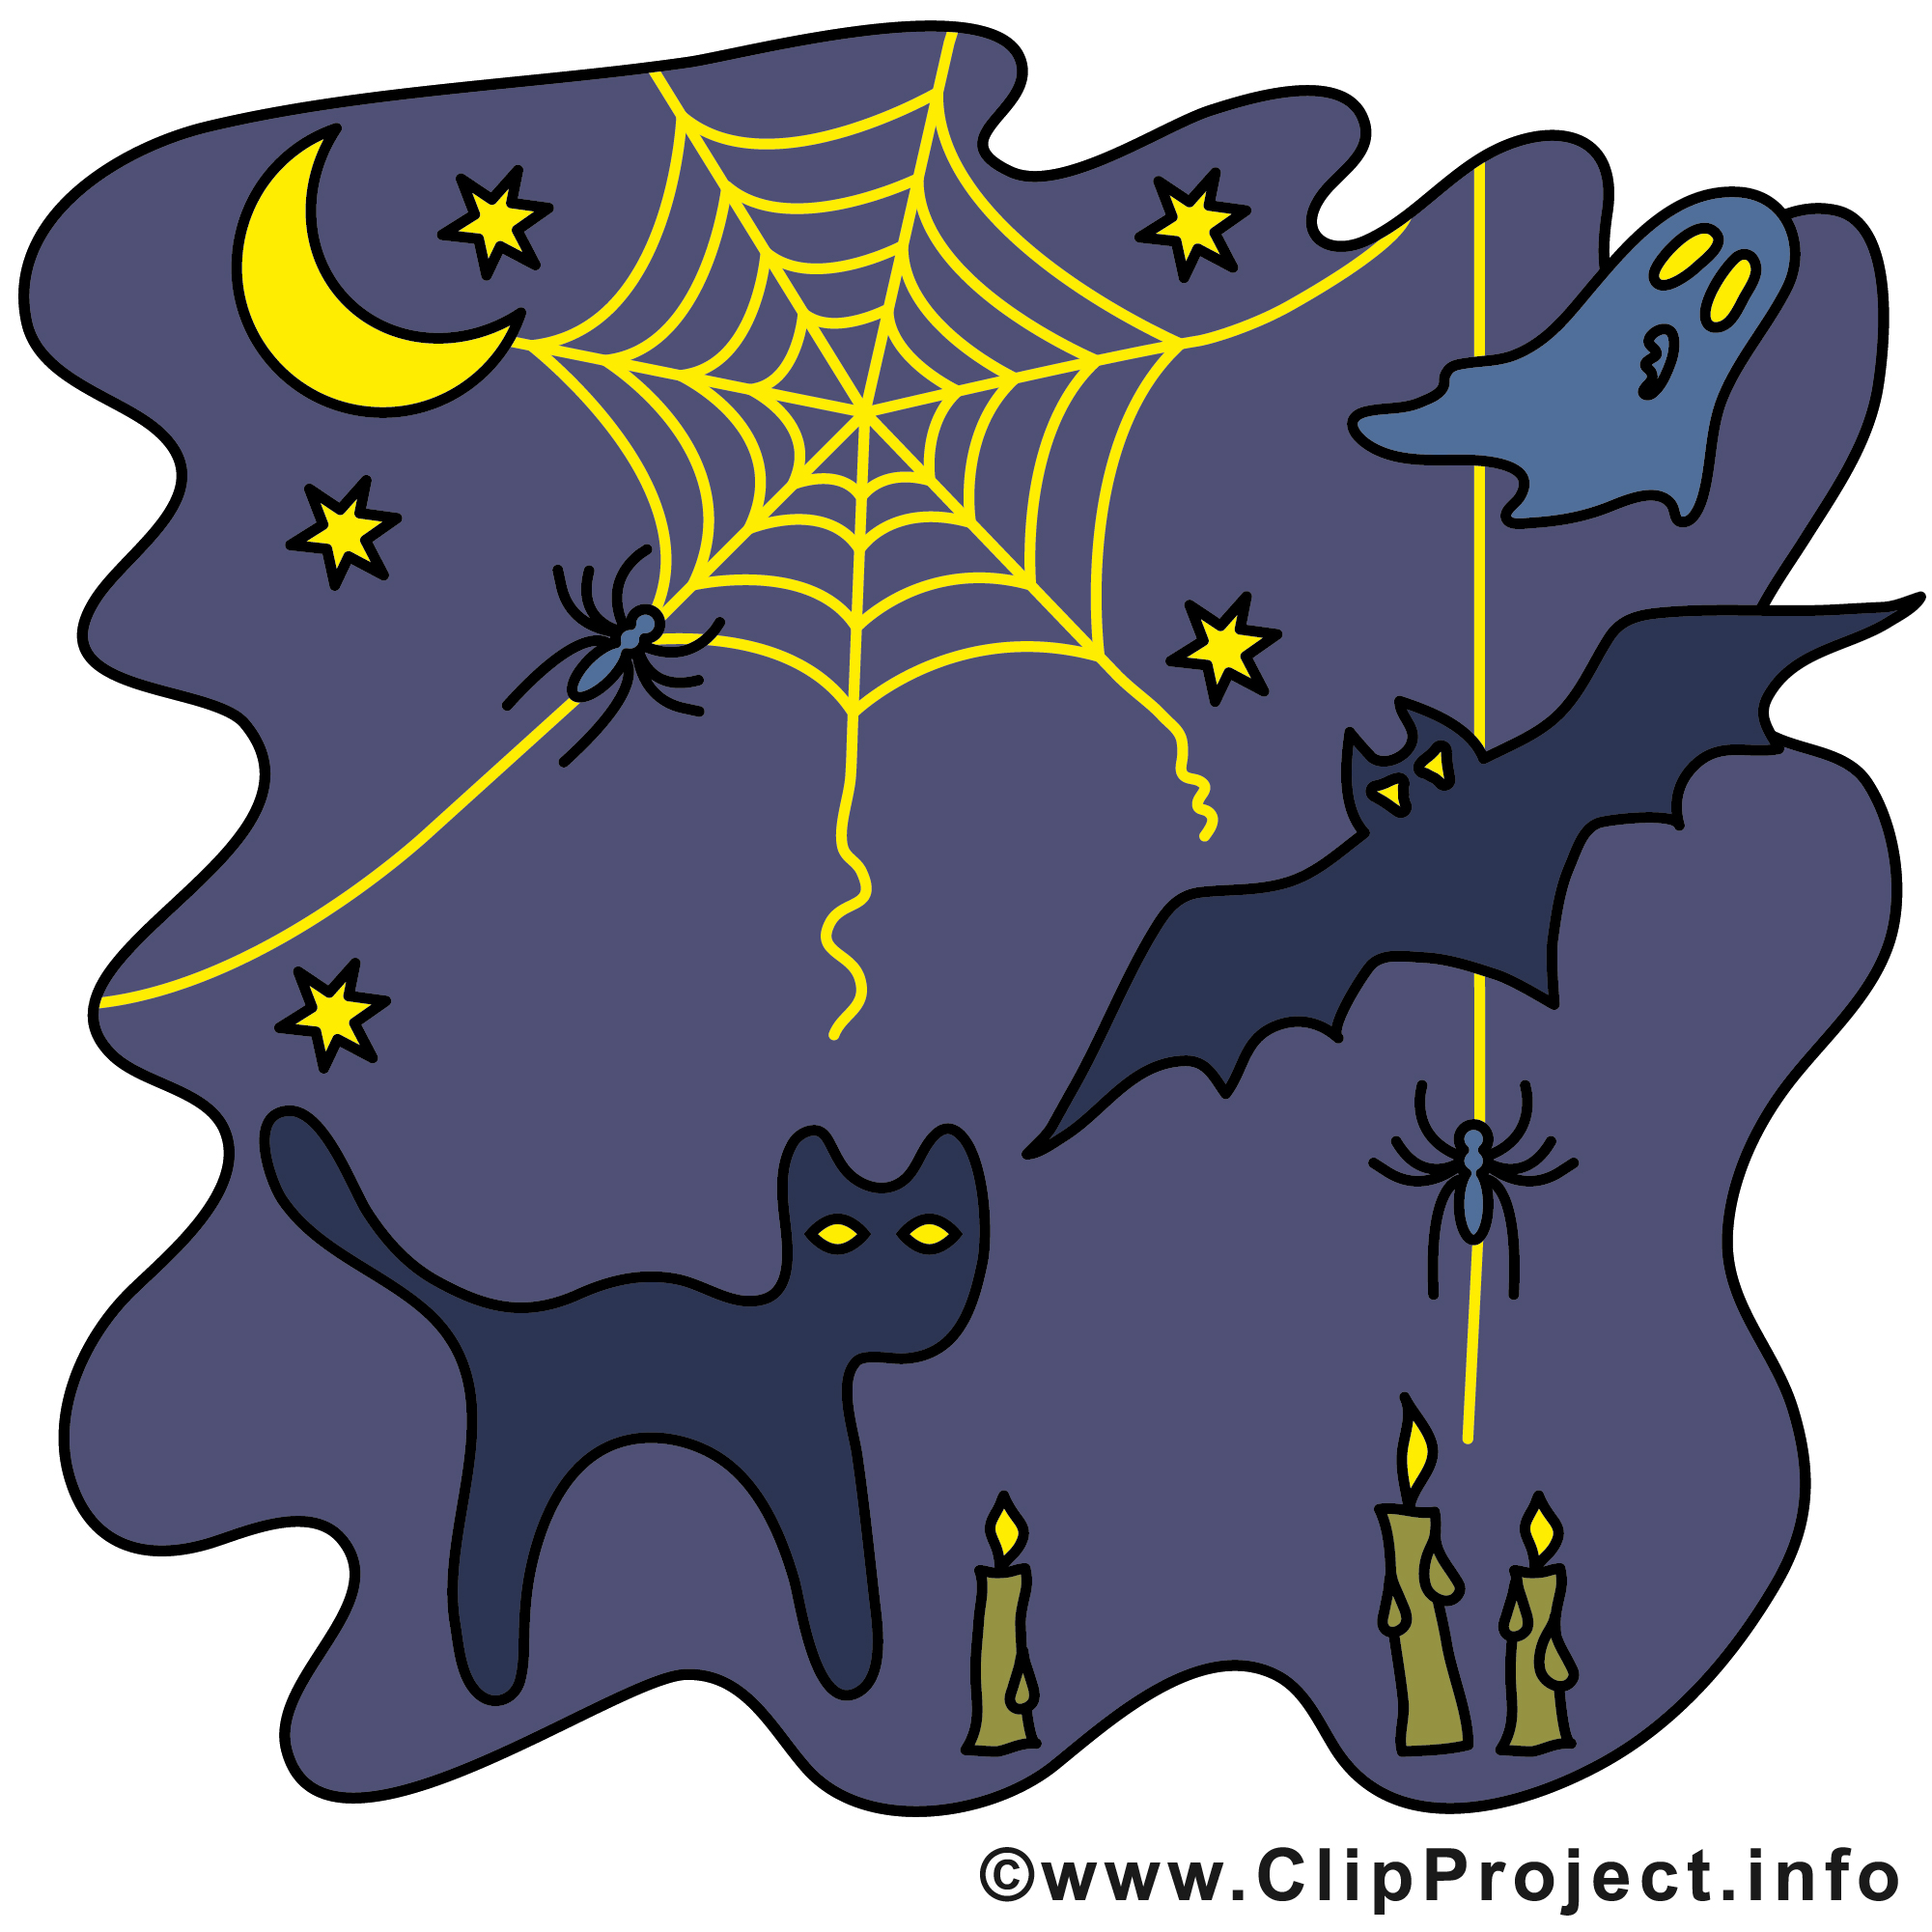 Toile d'araignée image - Halloween images cliparts - Halloween dessin